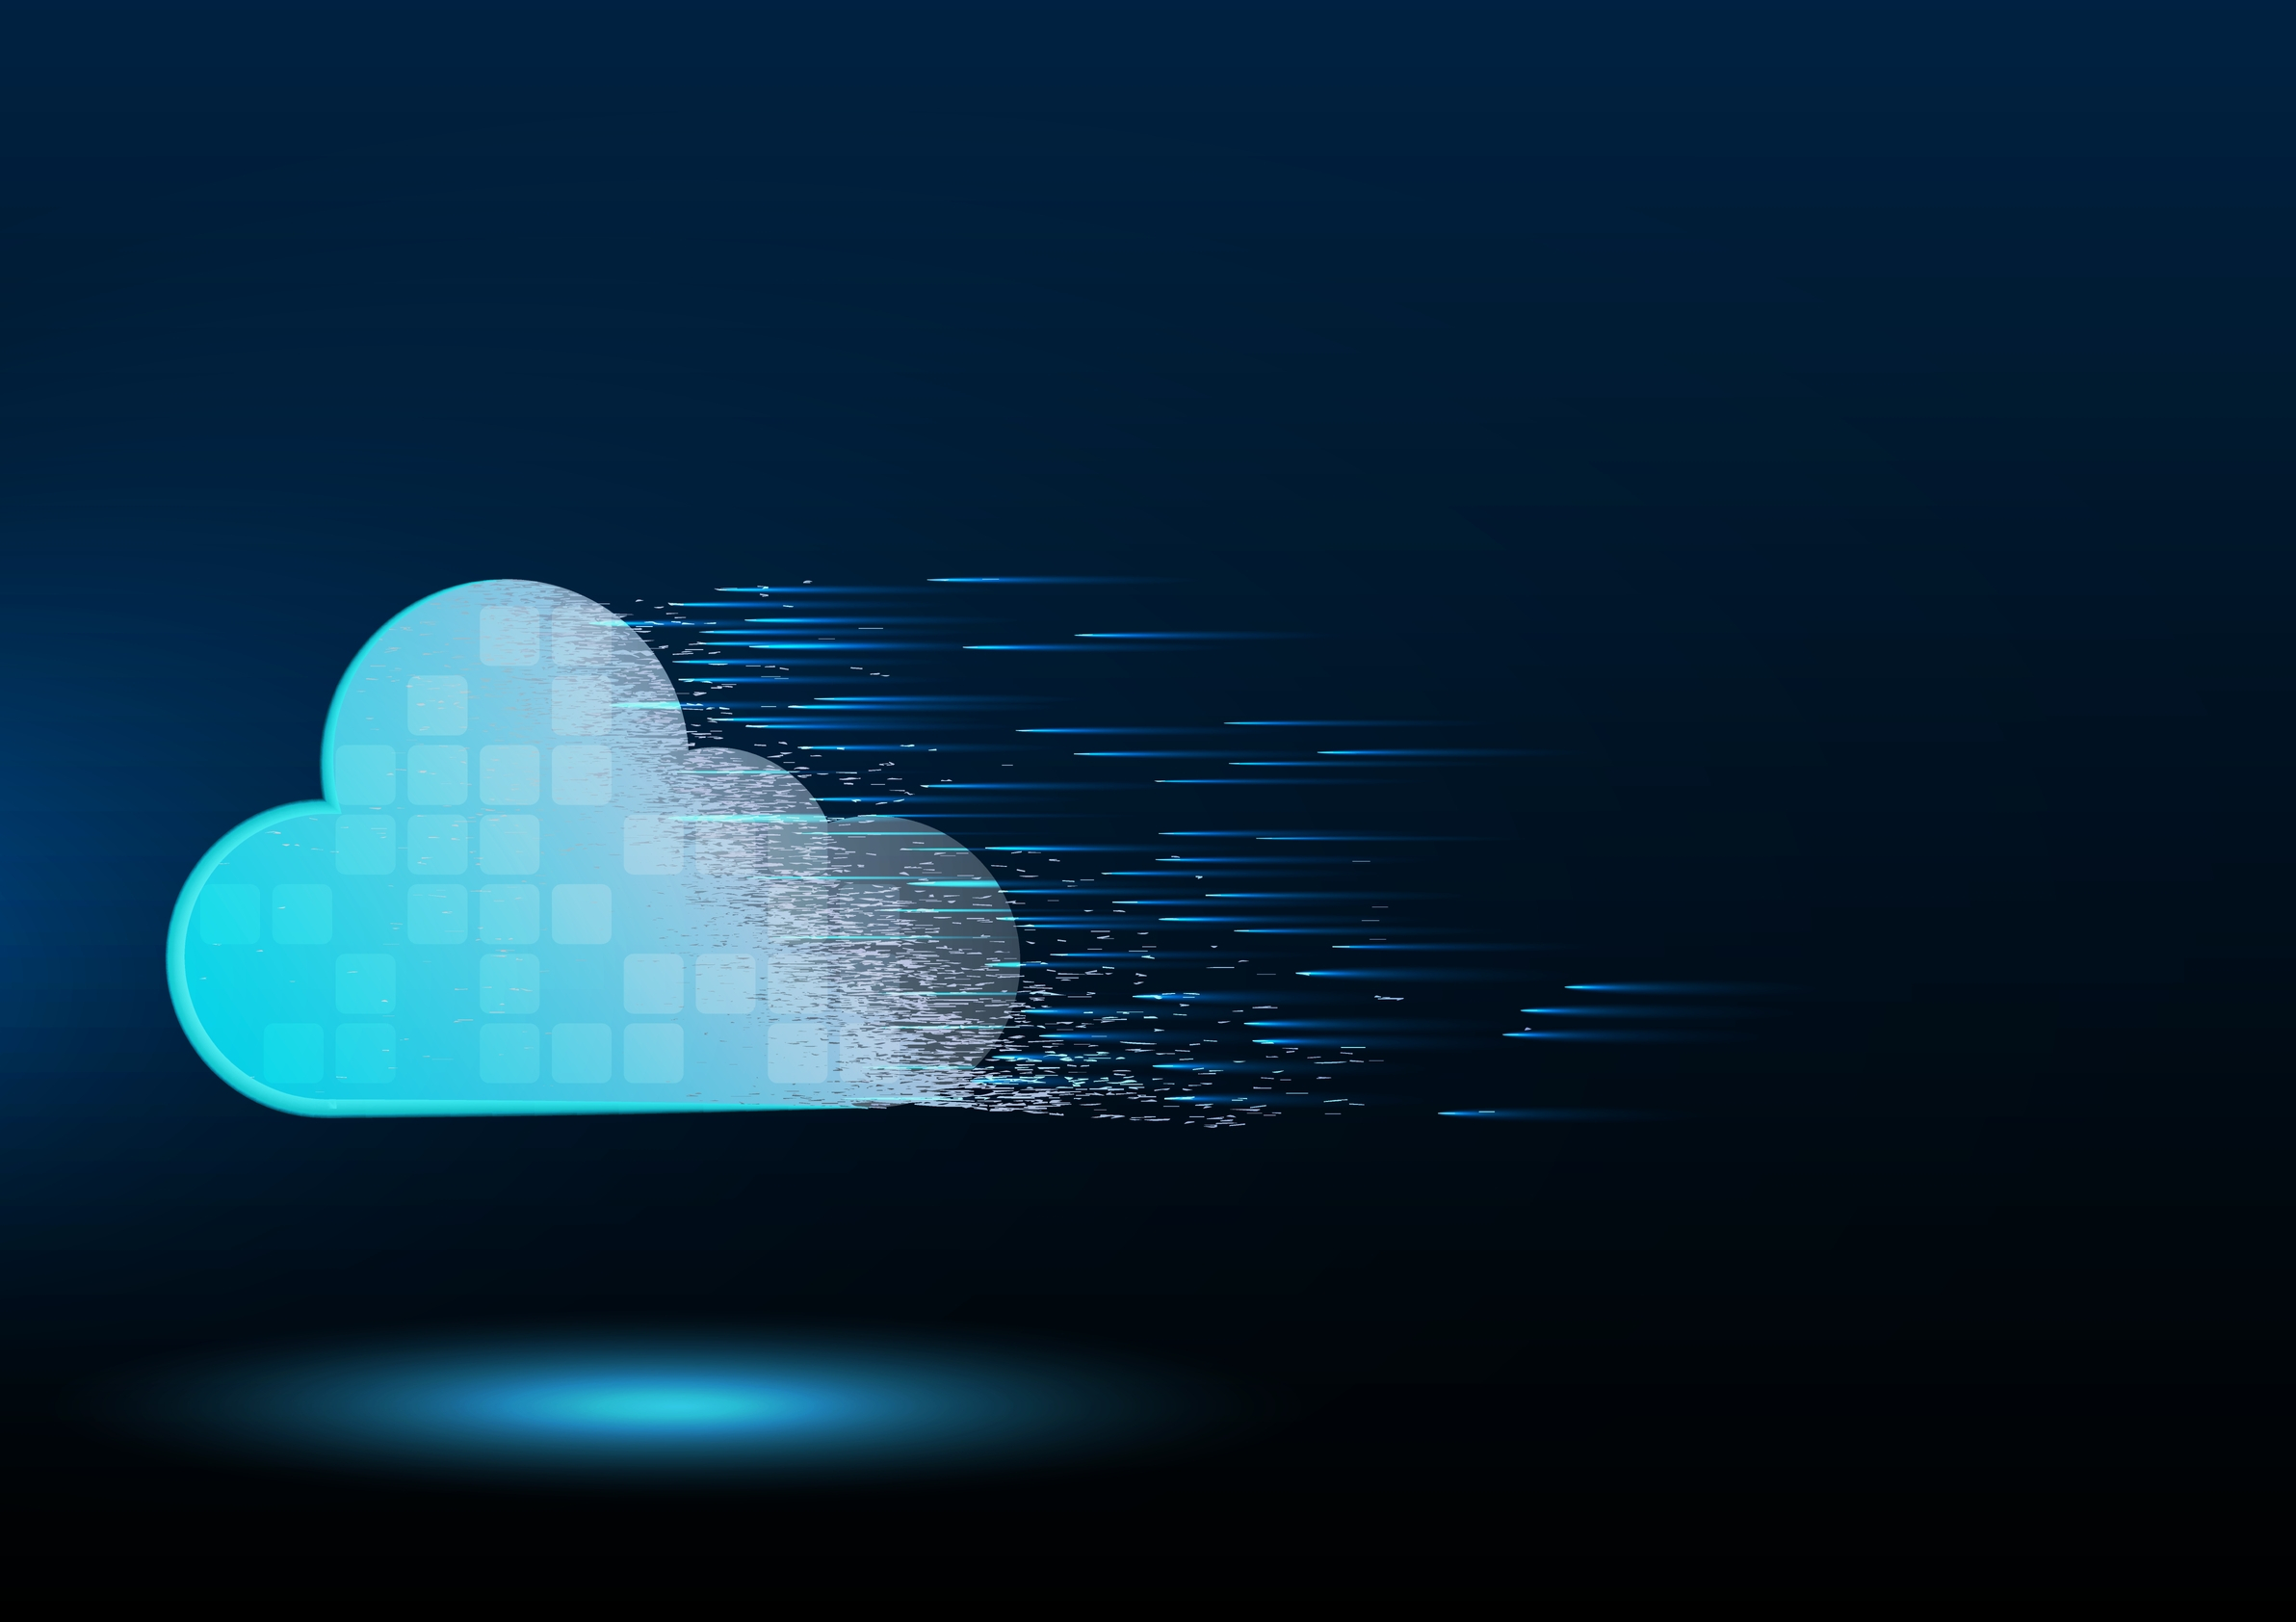 Cloud security vulnerabilities